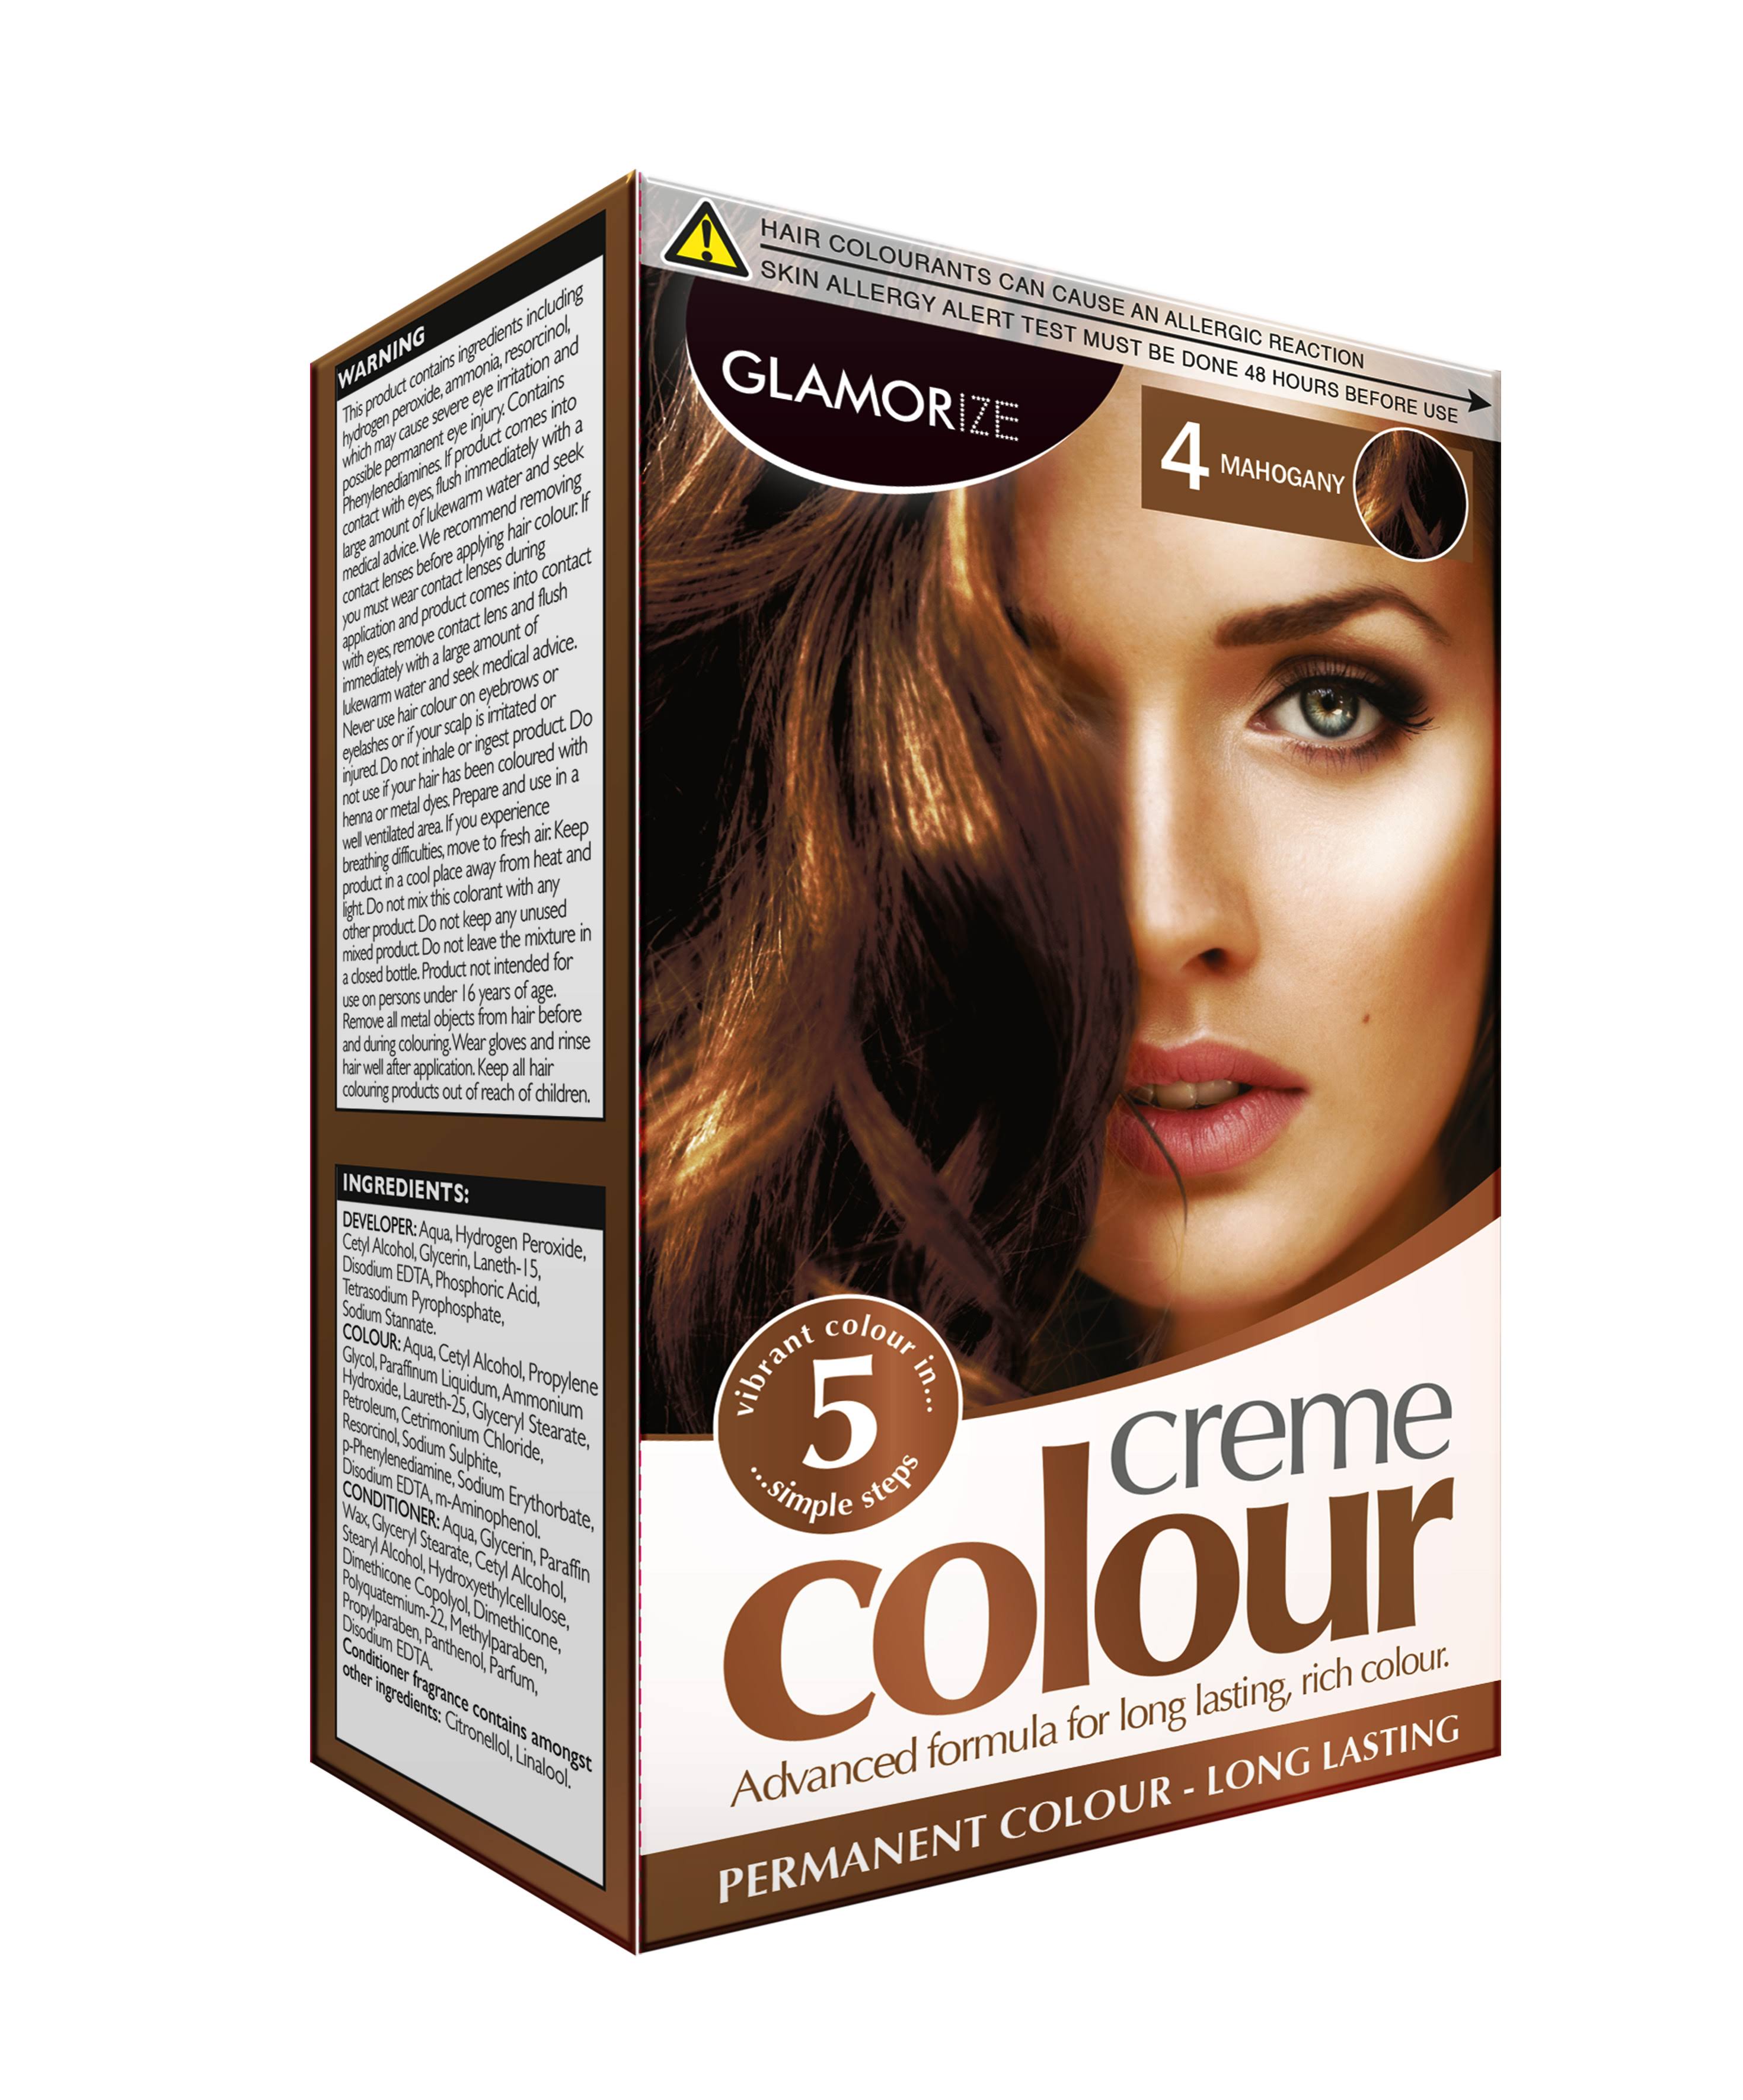 Glamorise Permanent Mahogany Hair Colourant Creme Dye